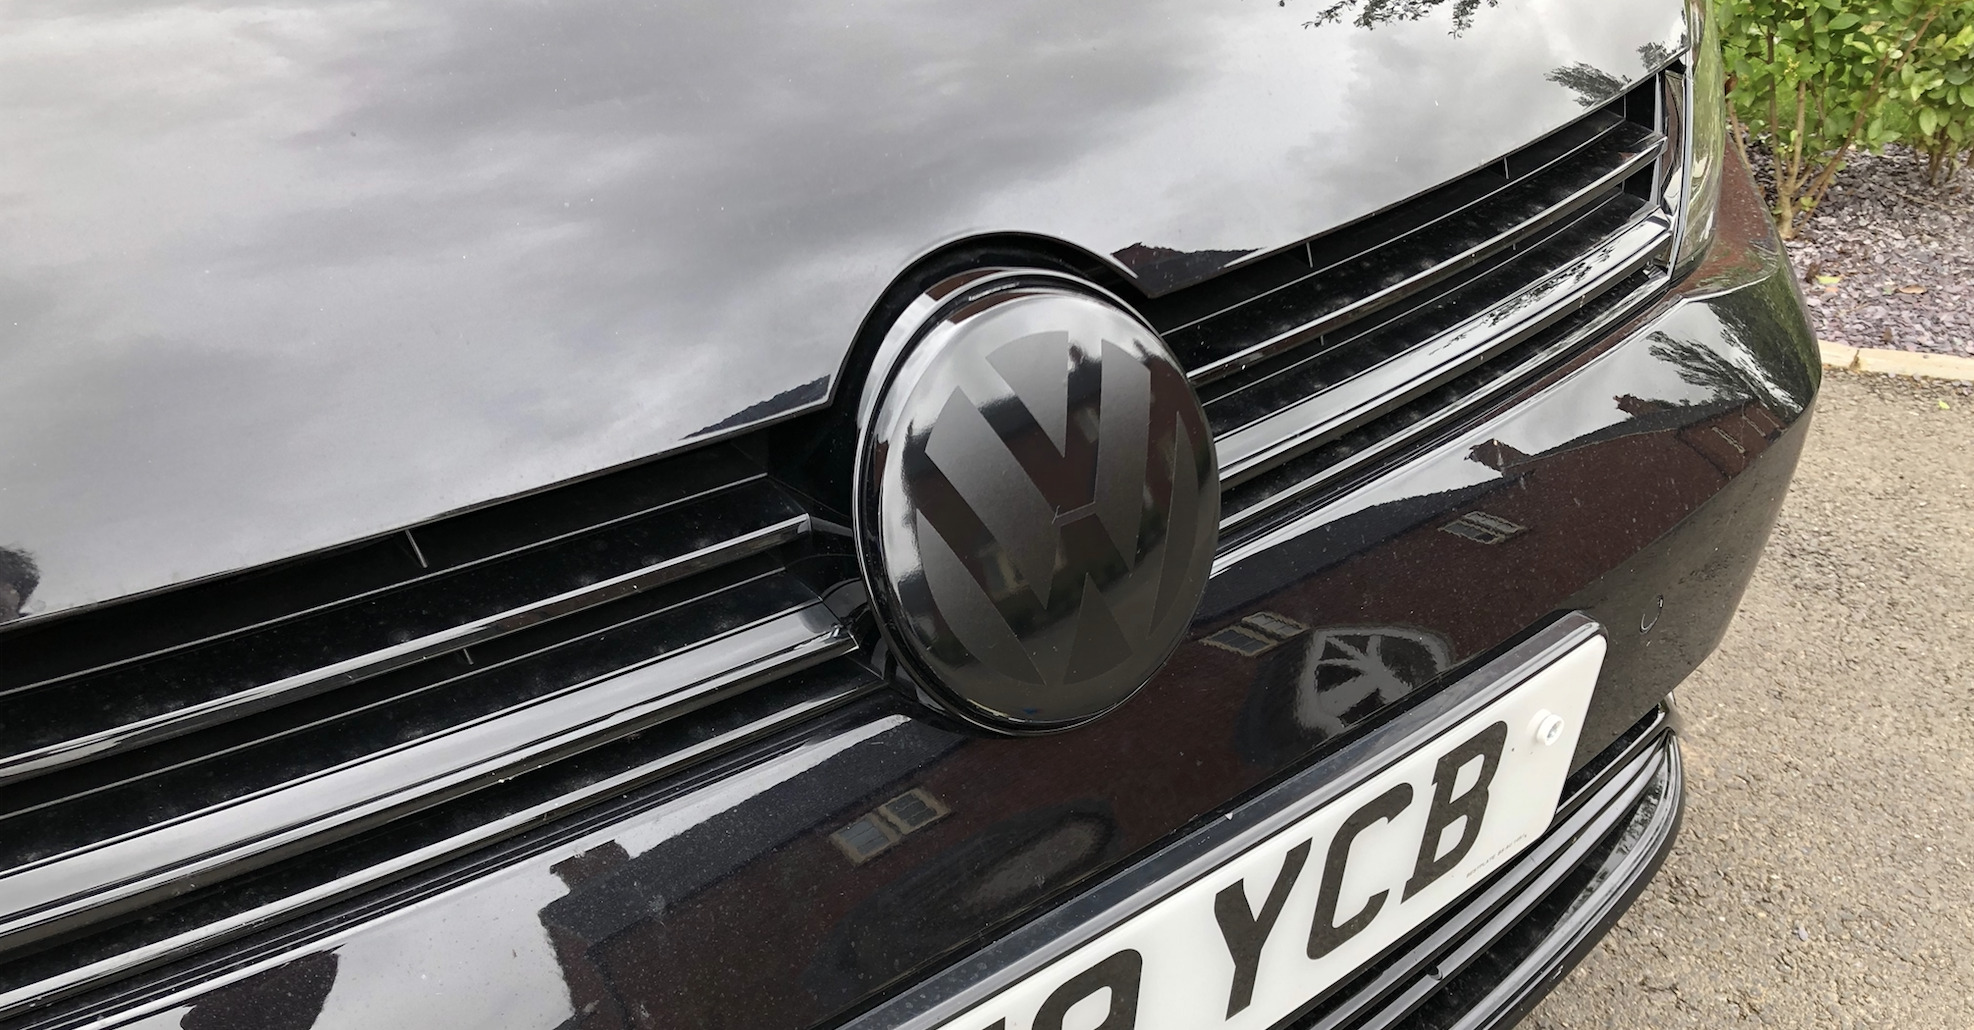 VW Embleme schwarz machen trotz ACC? - Aerodynamik Golf 7 R